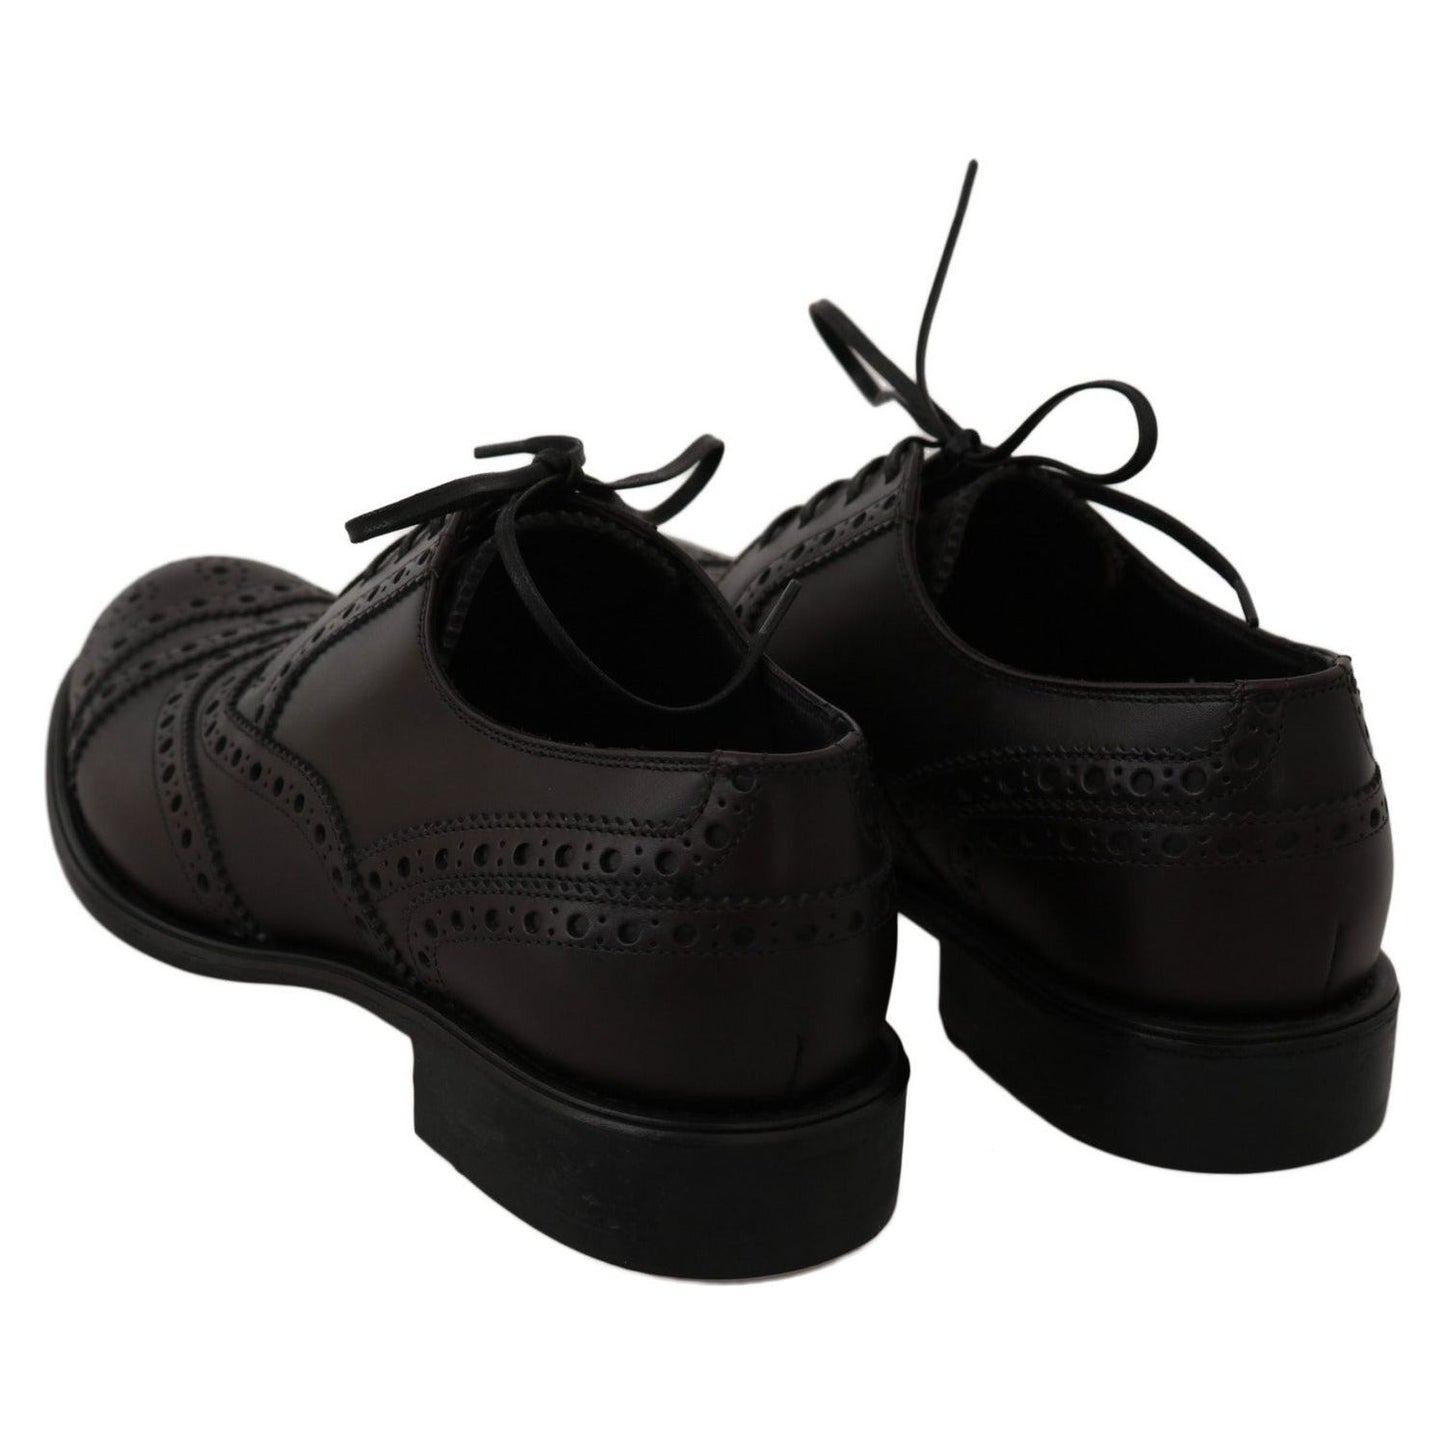 Dolce & Gabbana Elegant Bordeaux Wingtip Derby Dress Shoes black-leather-wingtip-oxford-dress-shoes-1 Dress Shoes IMG_8978-scaled.jpg